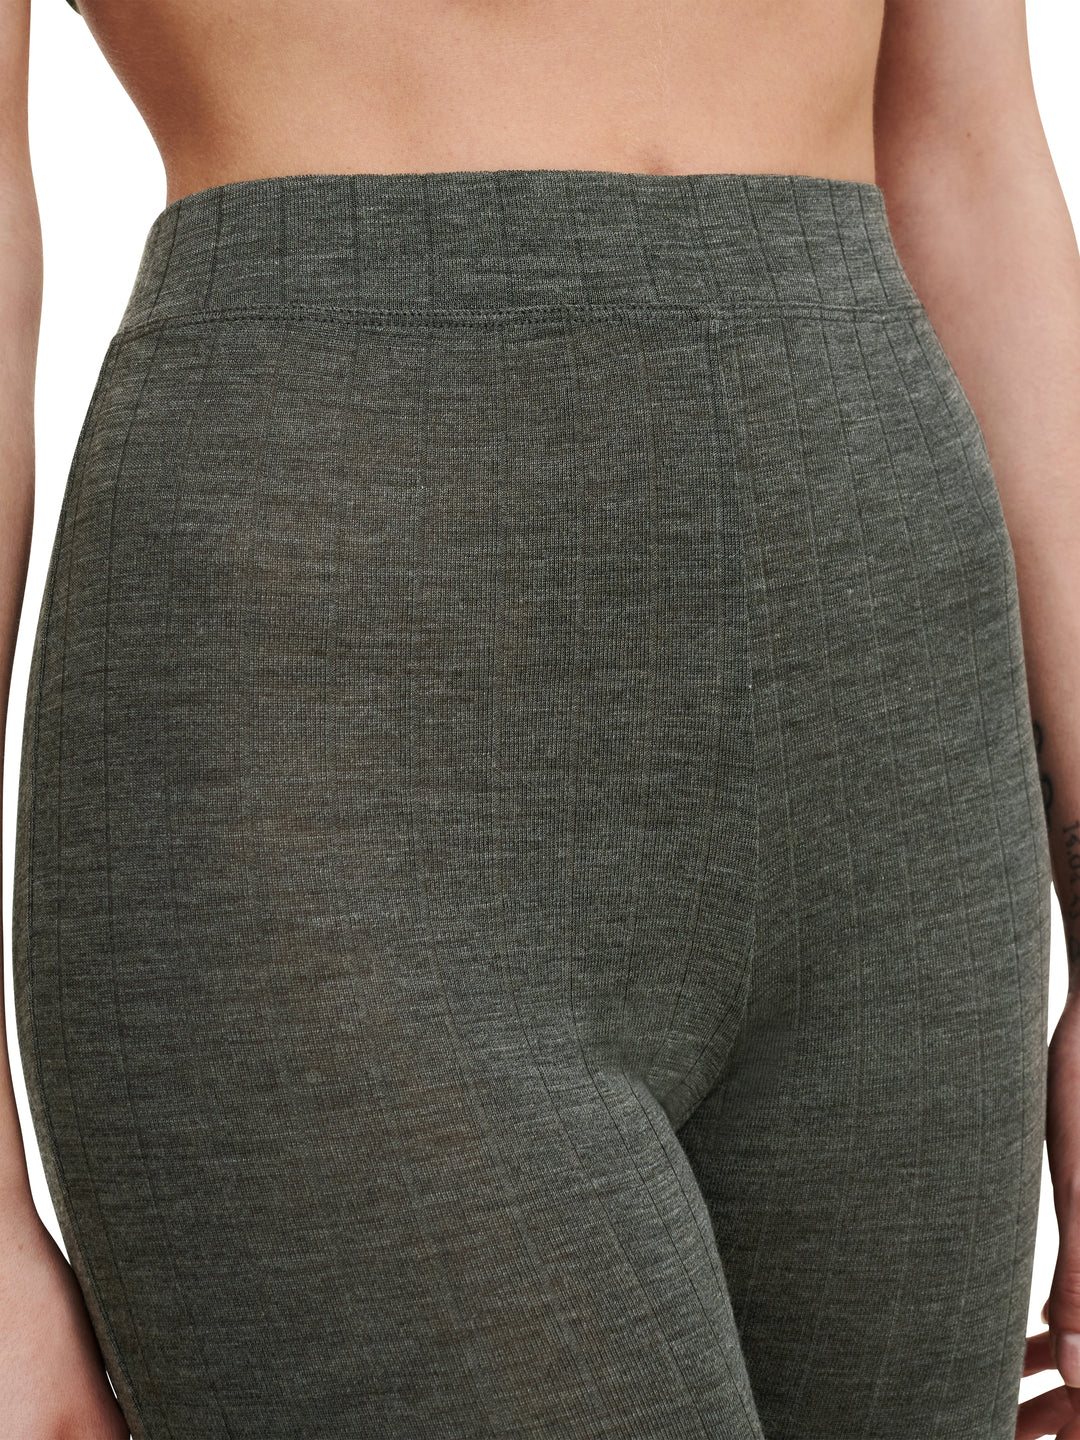 Chantelle - Thermo Comfort Panty Slate Grey